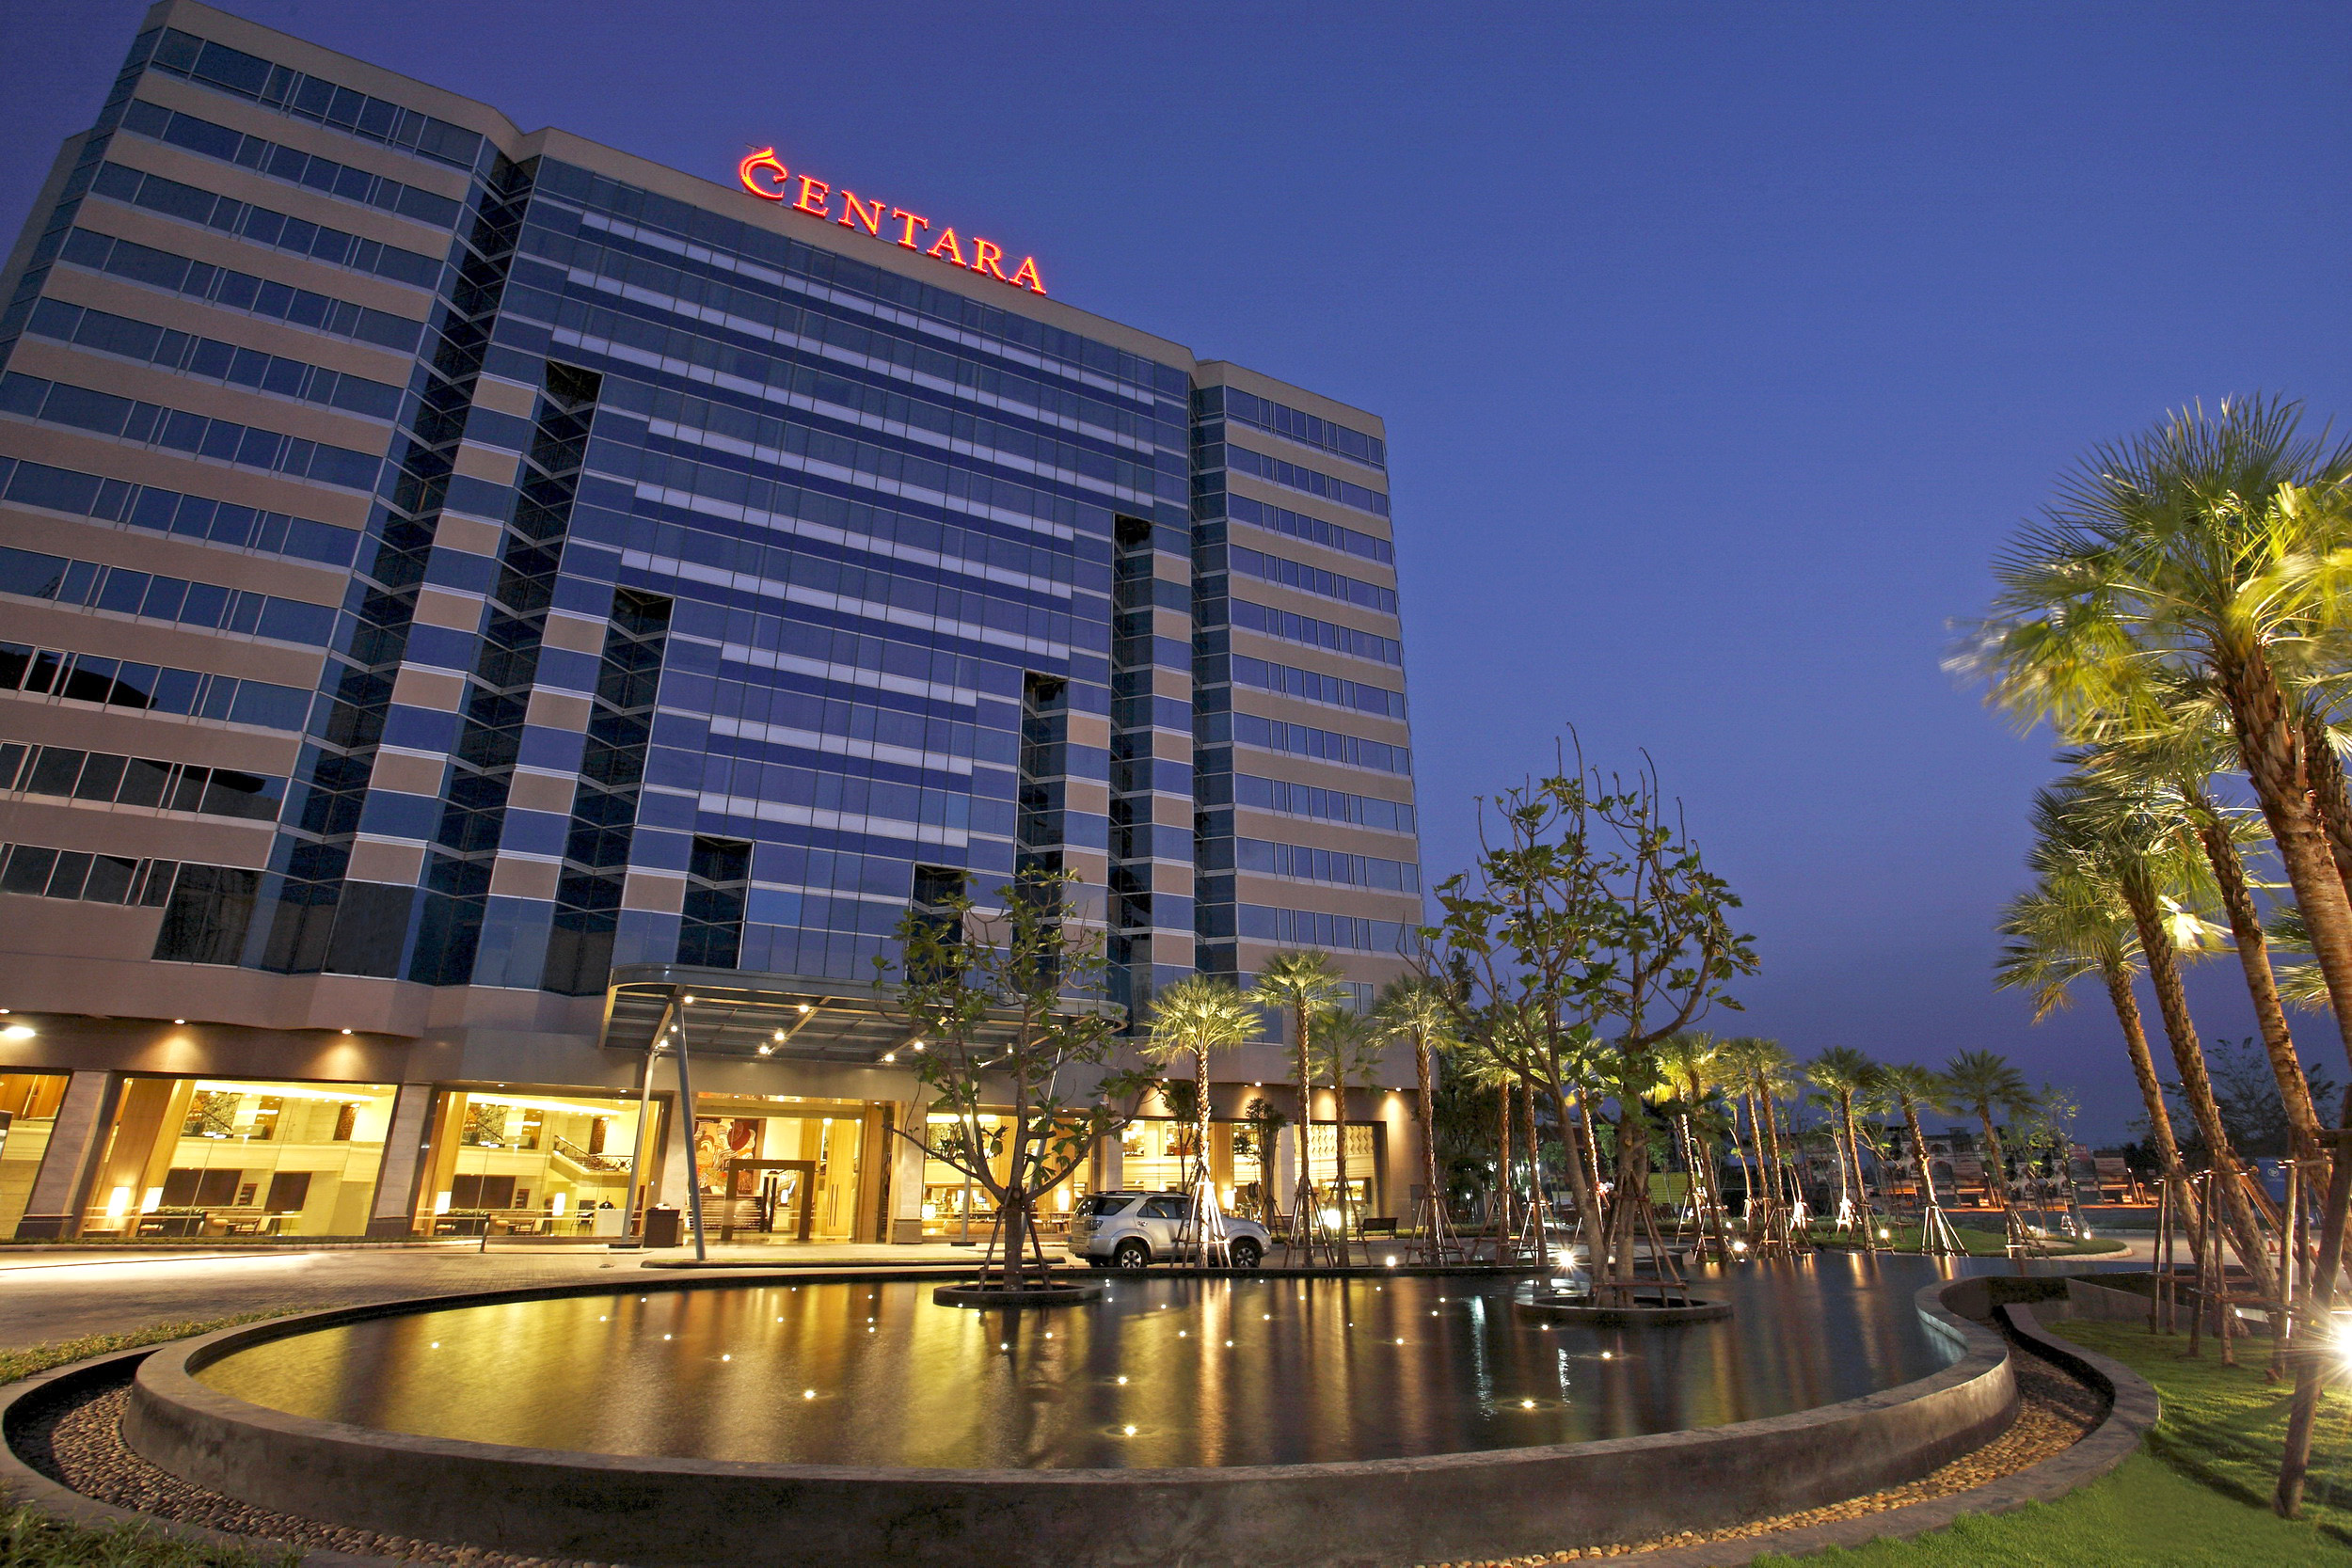 Udon Thani Таиланд. Centara Hotel. Центара Дубай отель. Thailand Hotel Conference. Centara adventure